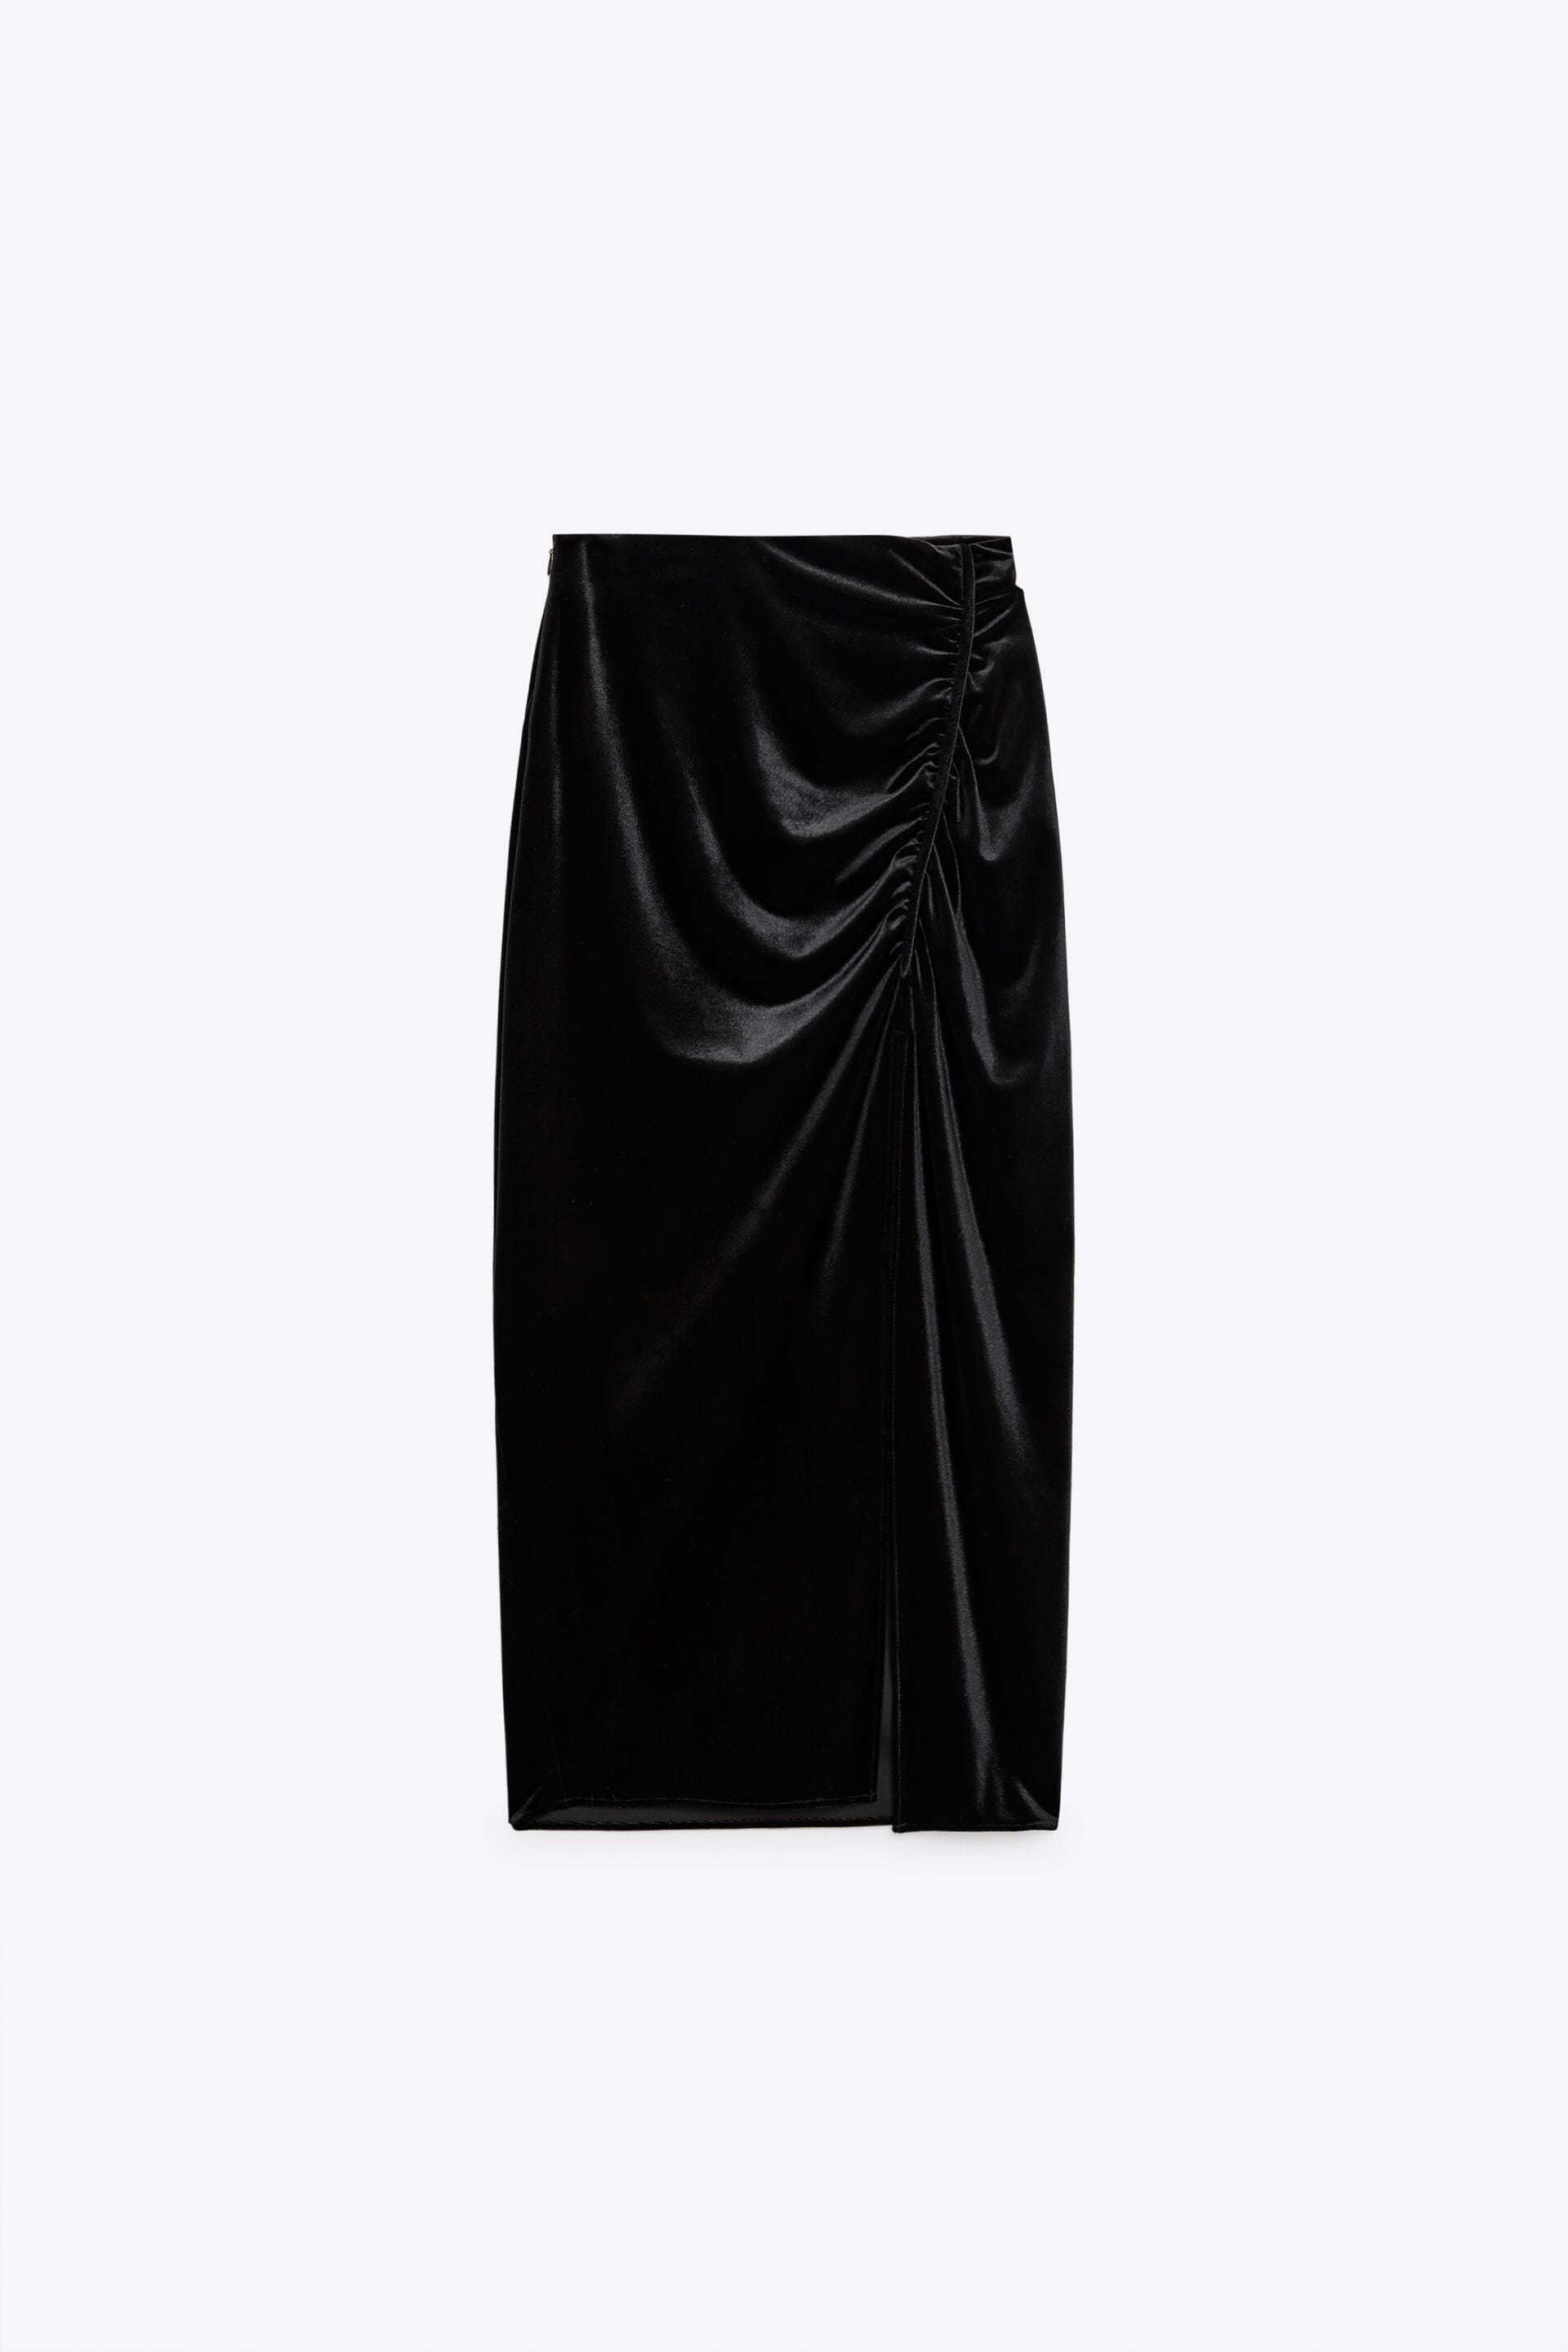 Falda negra de terciopelo, de Zara.